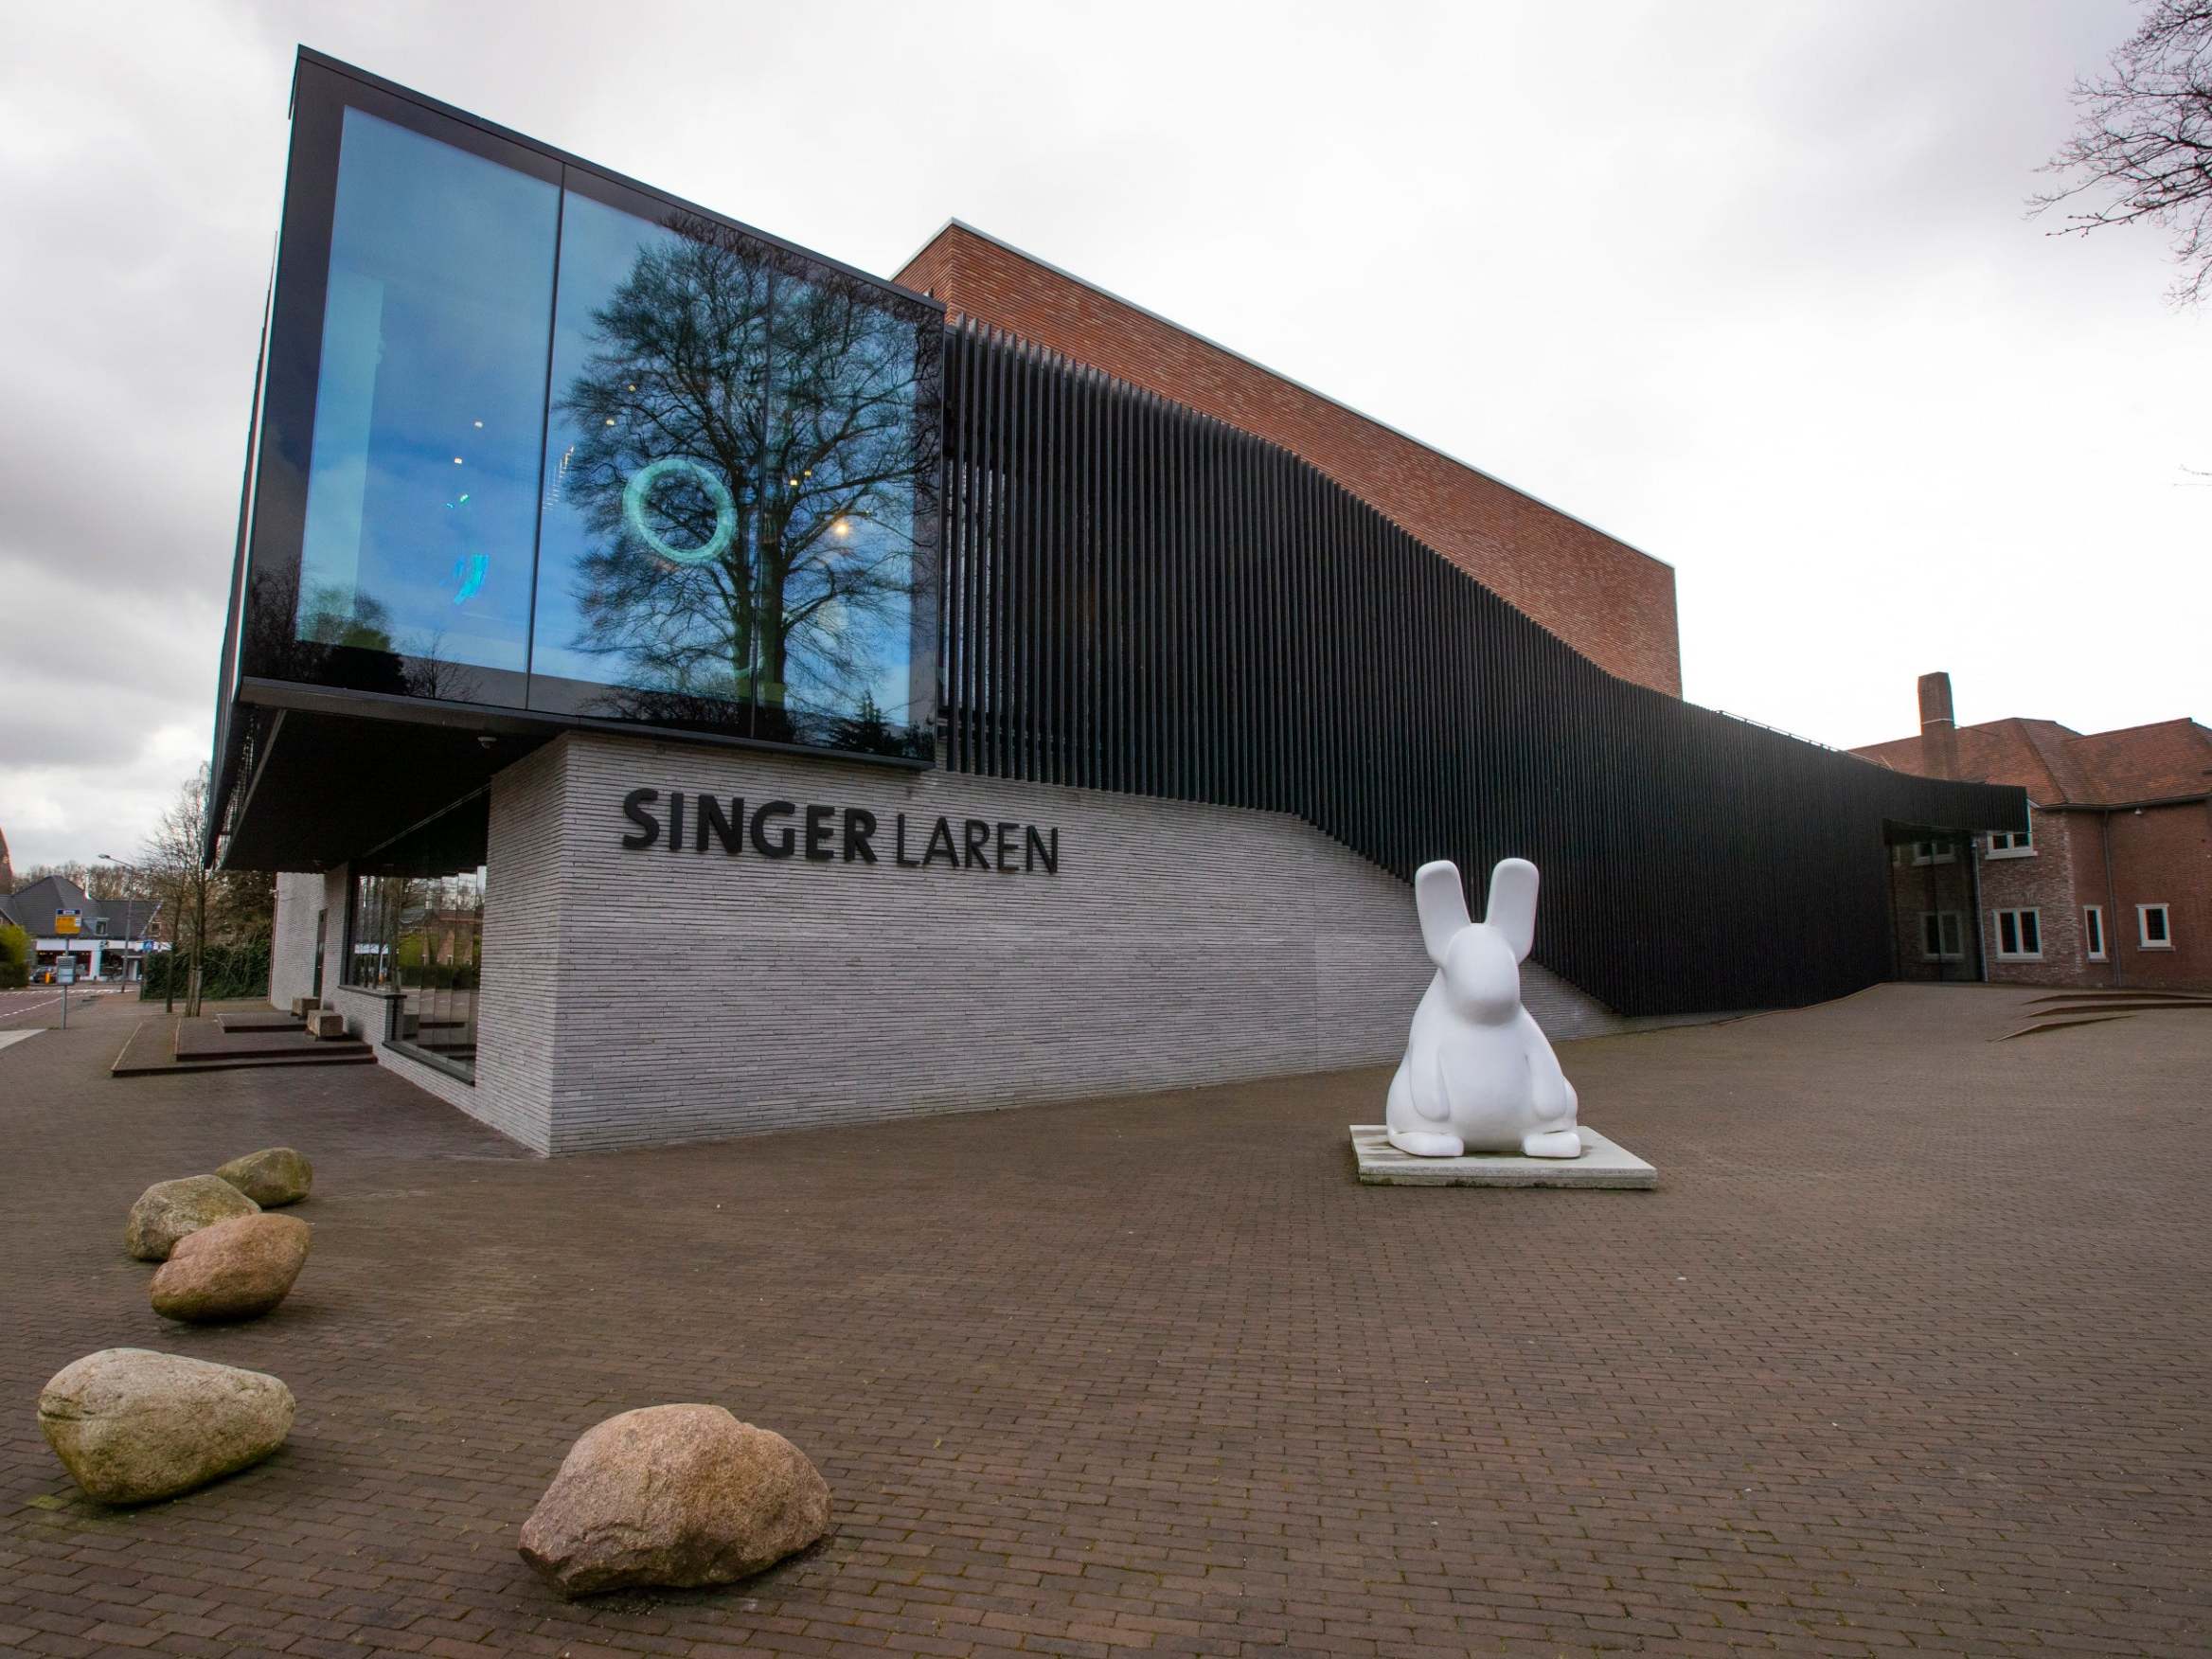 The Singer Laren museum is closed during the coronavirus pandemic